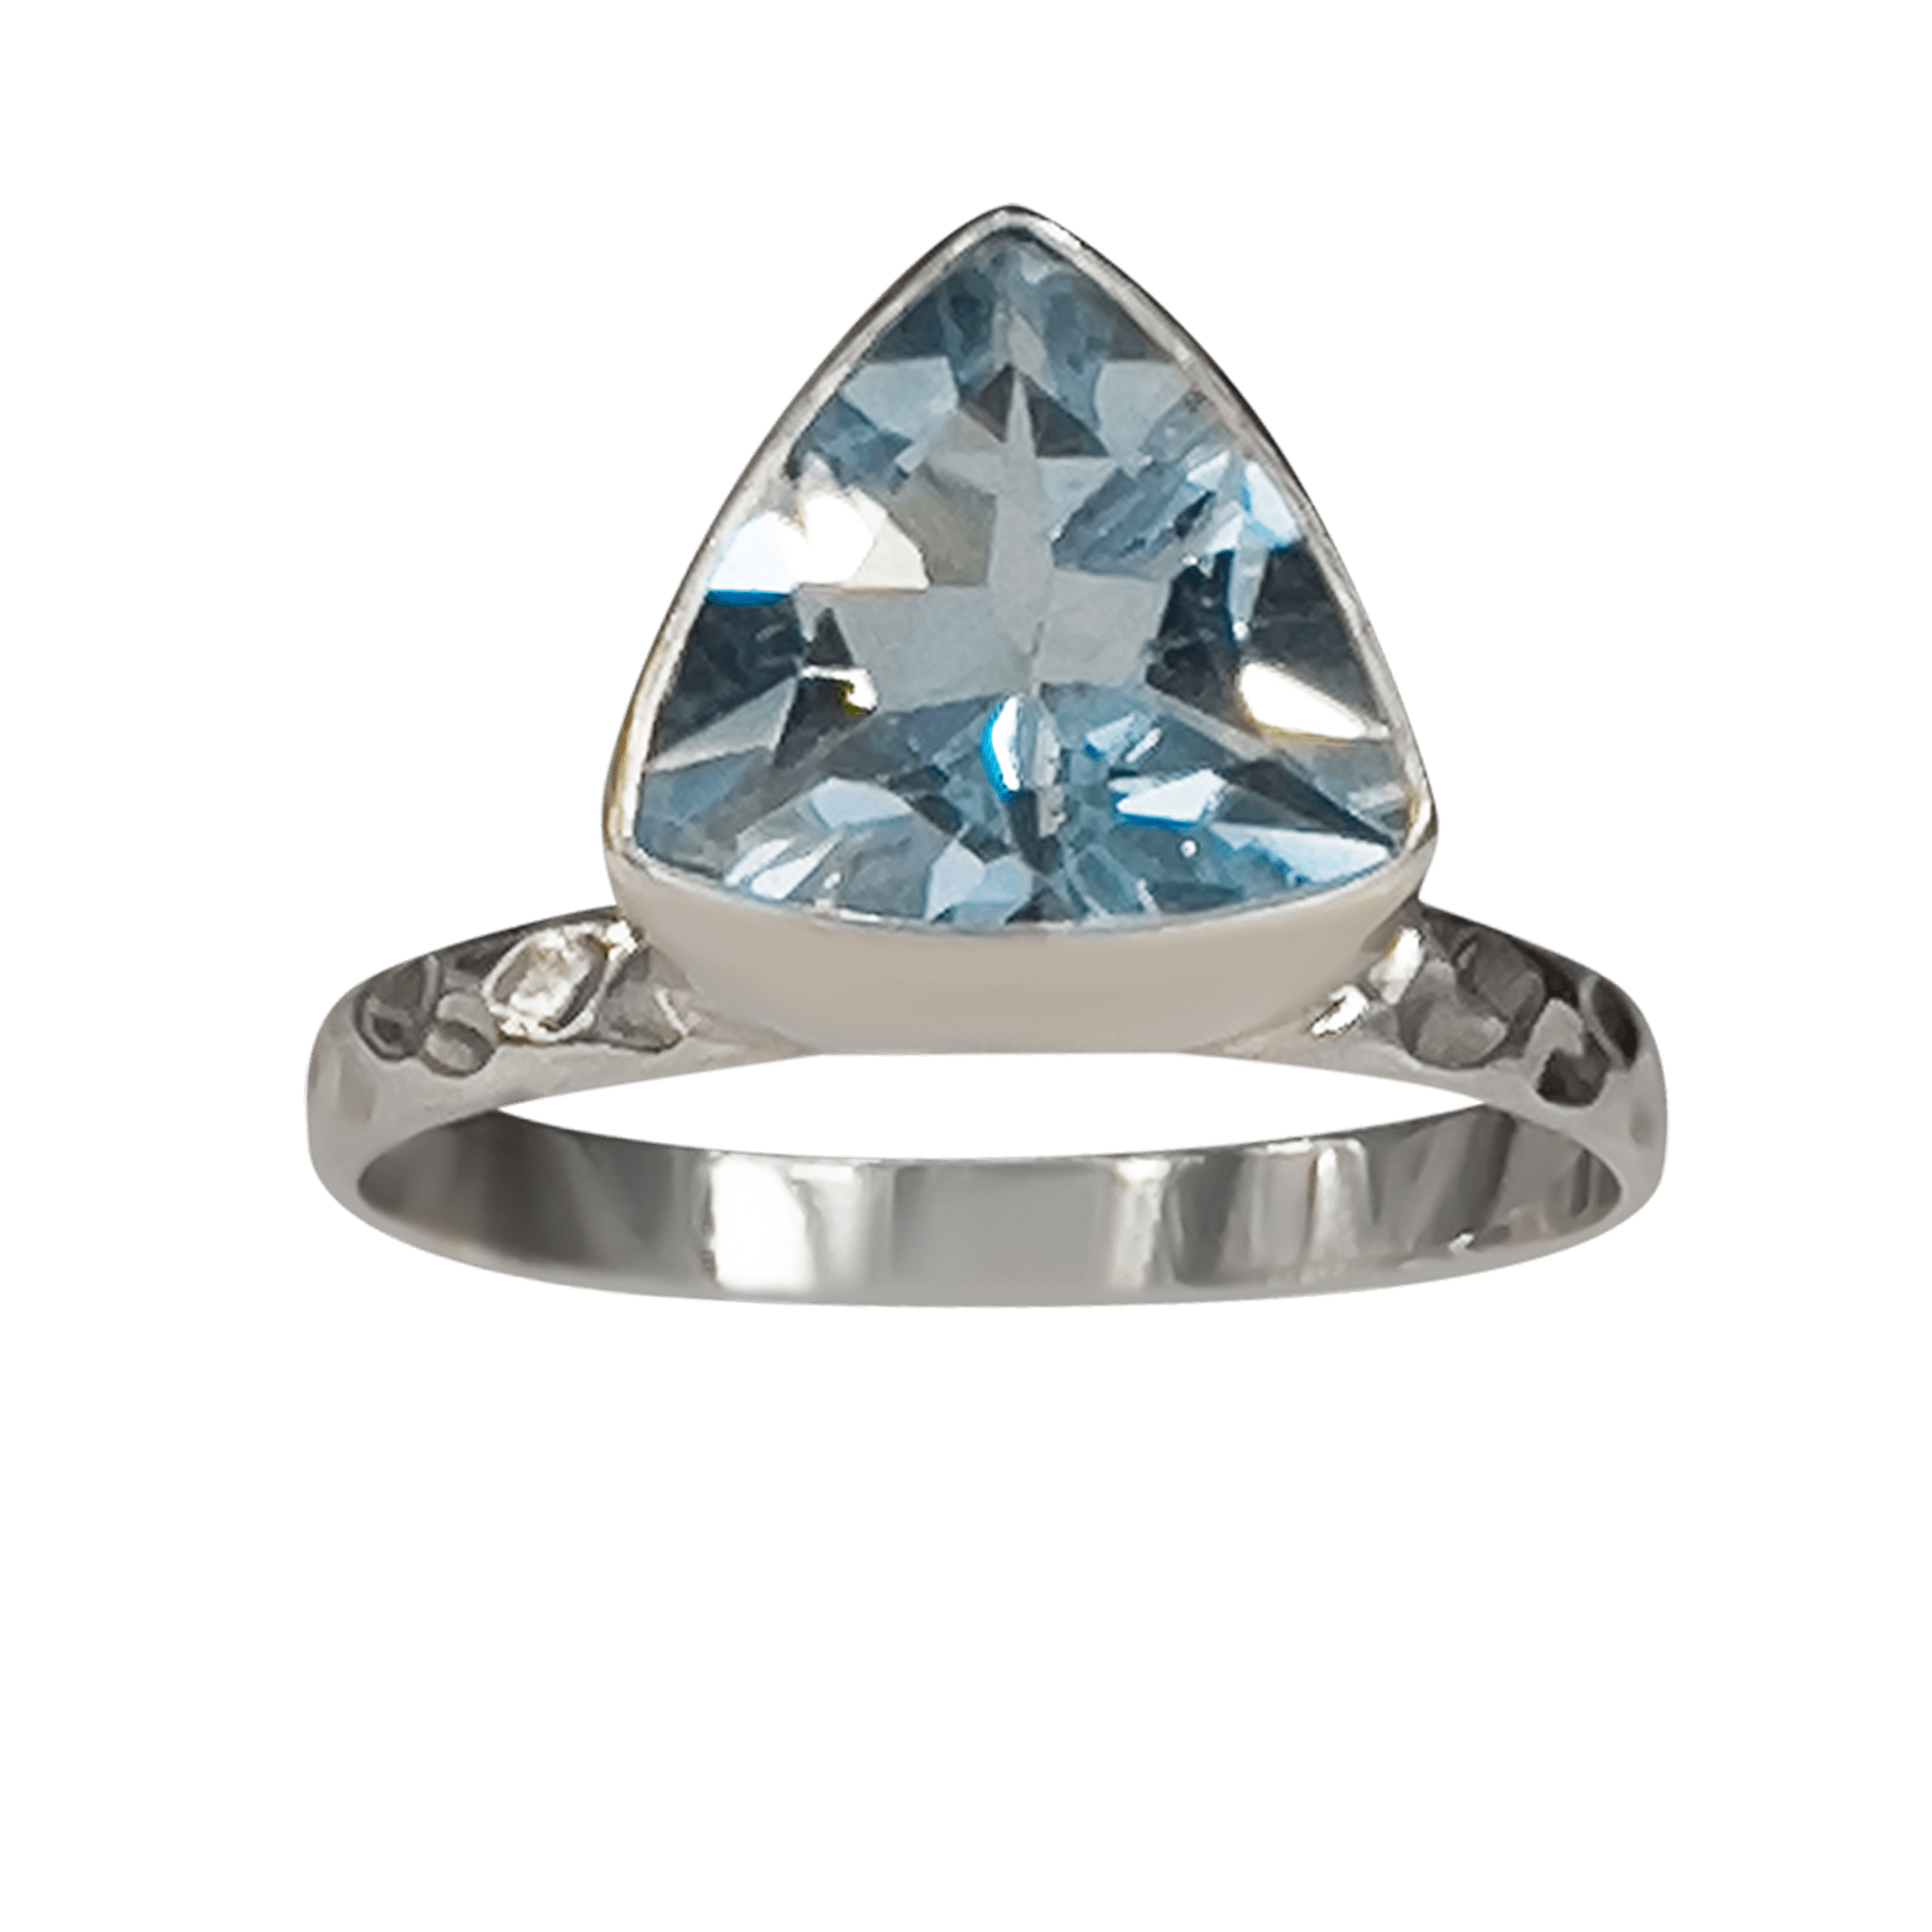 handmade symbolic spiritual jewellery sustainable fashion aquamarine water element ring